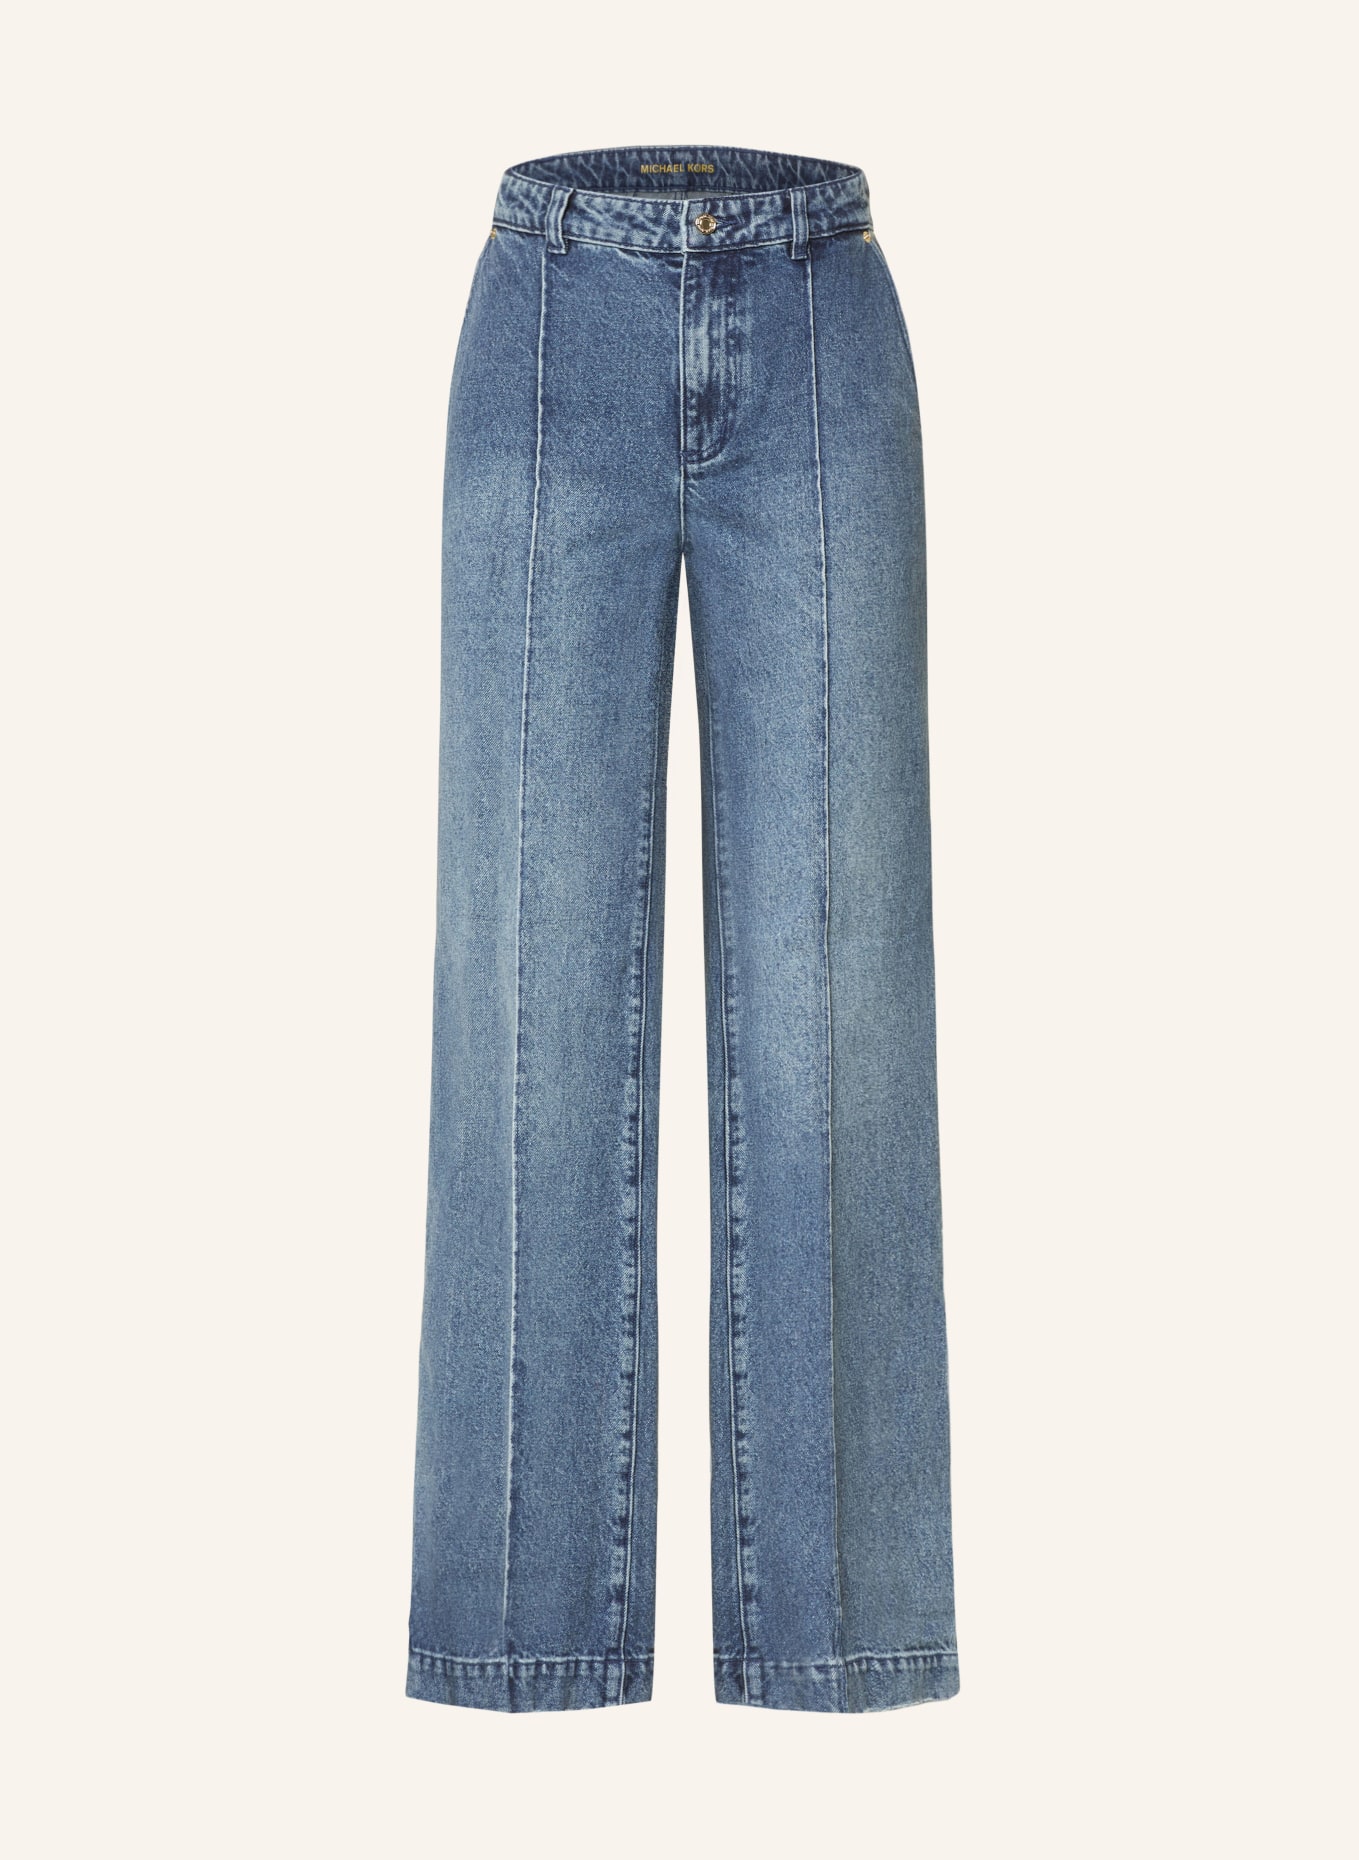 MICHAEL KORS Flared Jeans, Farbe: BLAU (Bild 1)